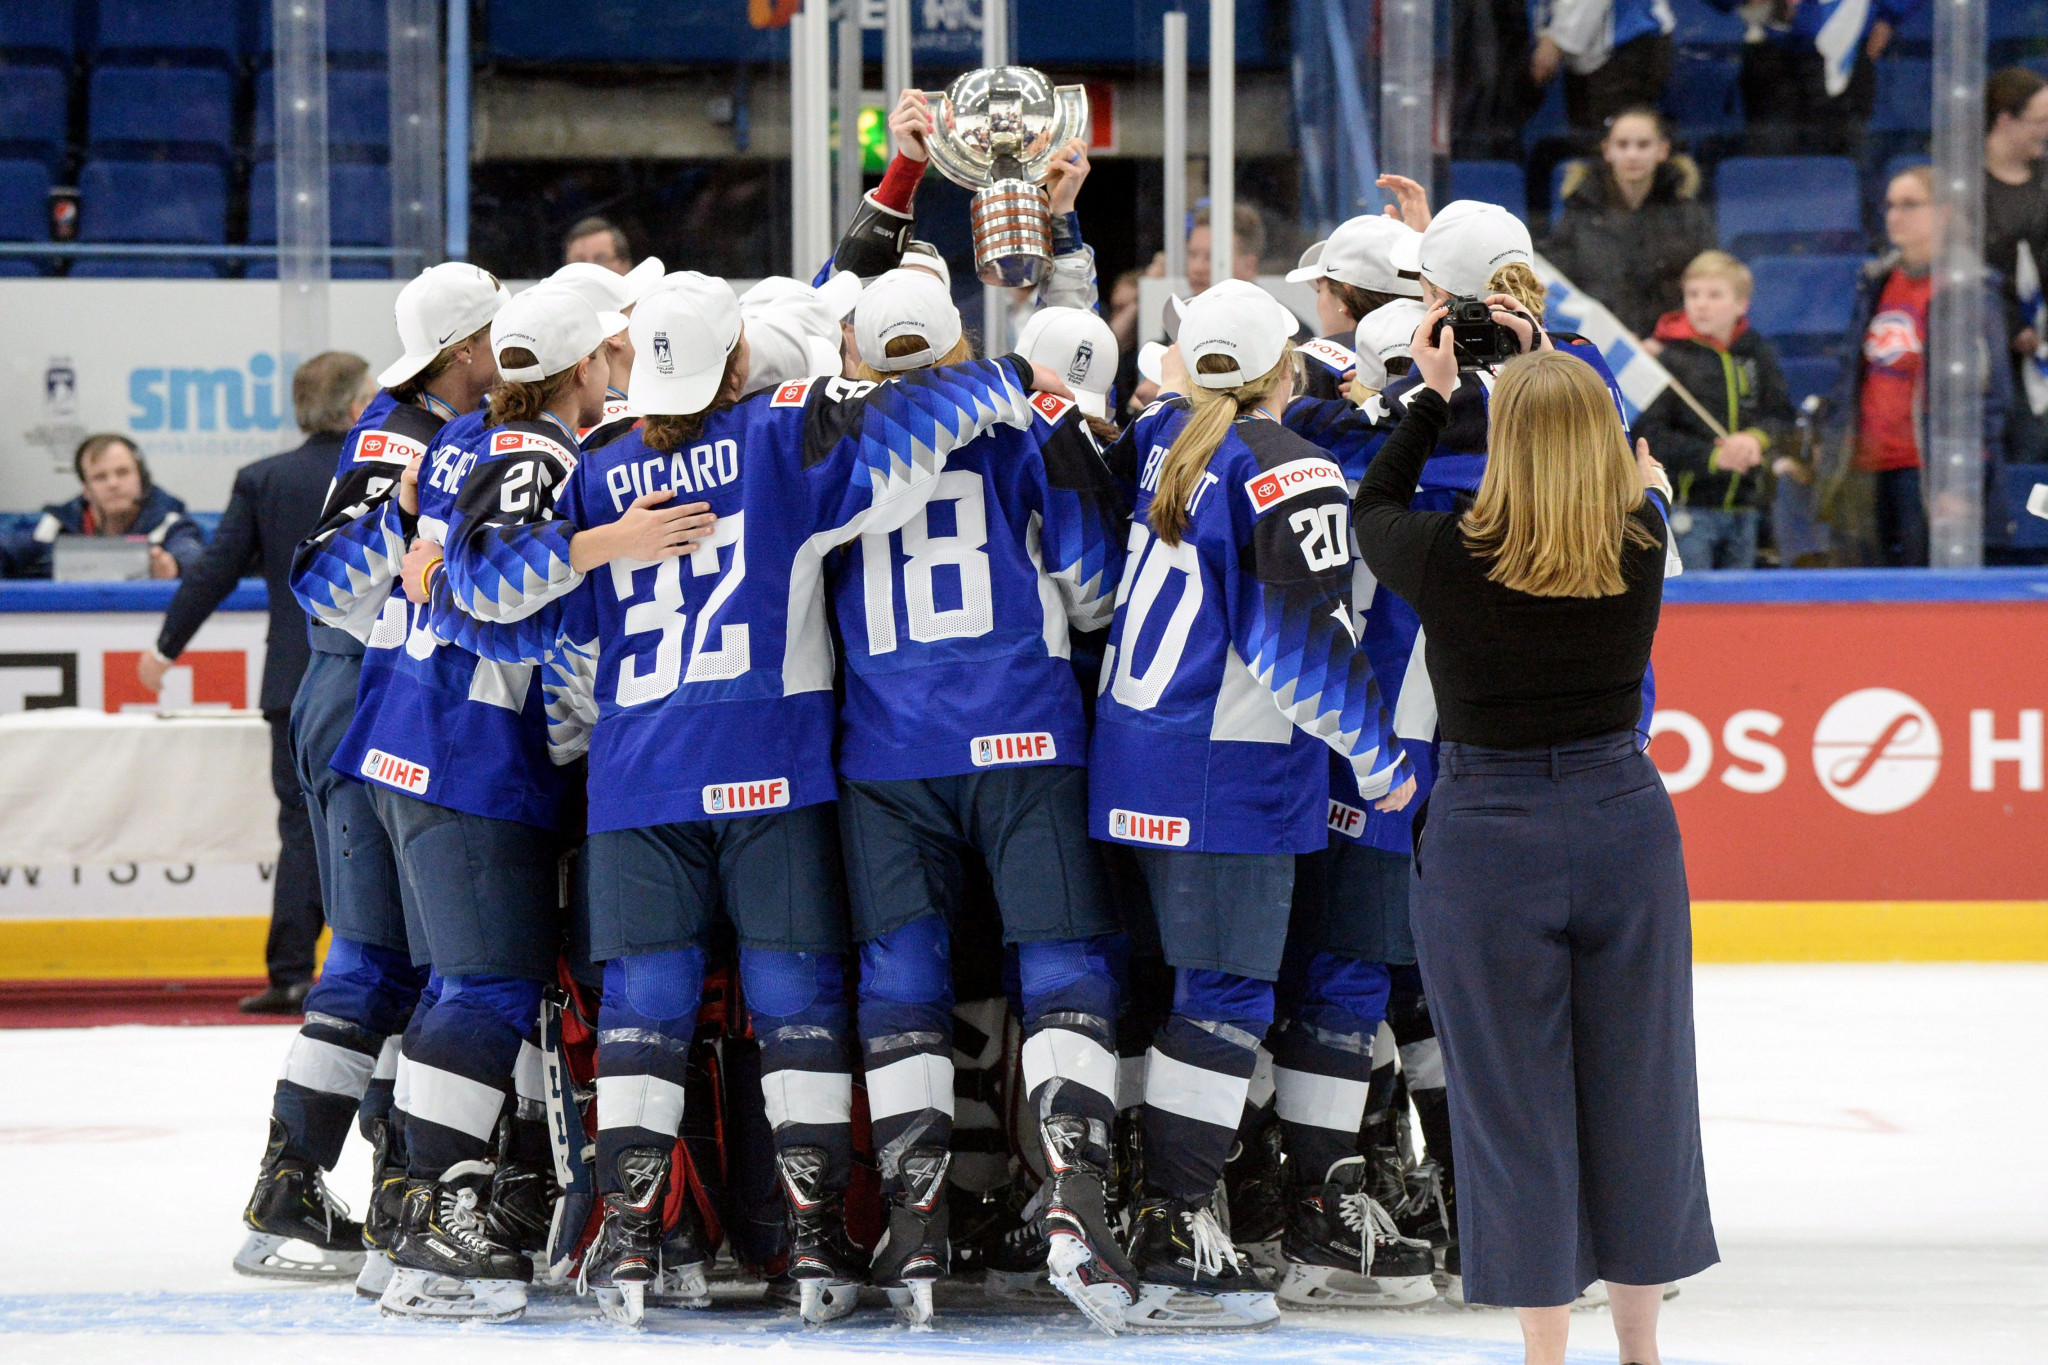 Schedule released for IIHF Womens World Ice Hockey Championship